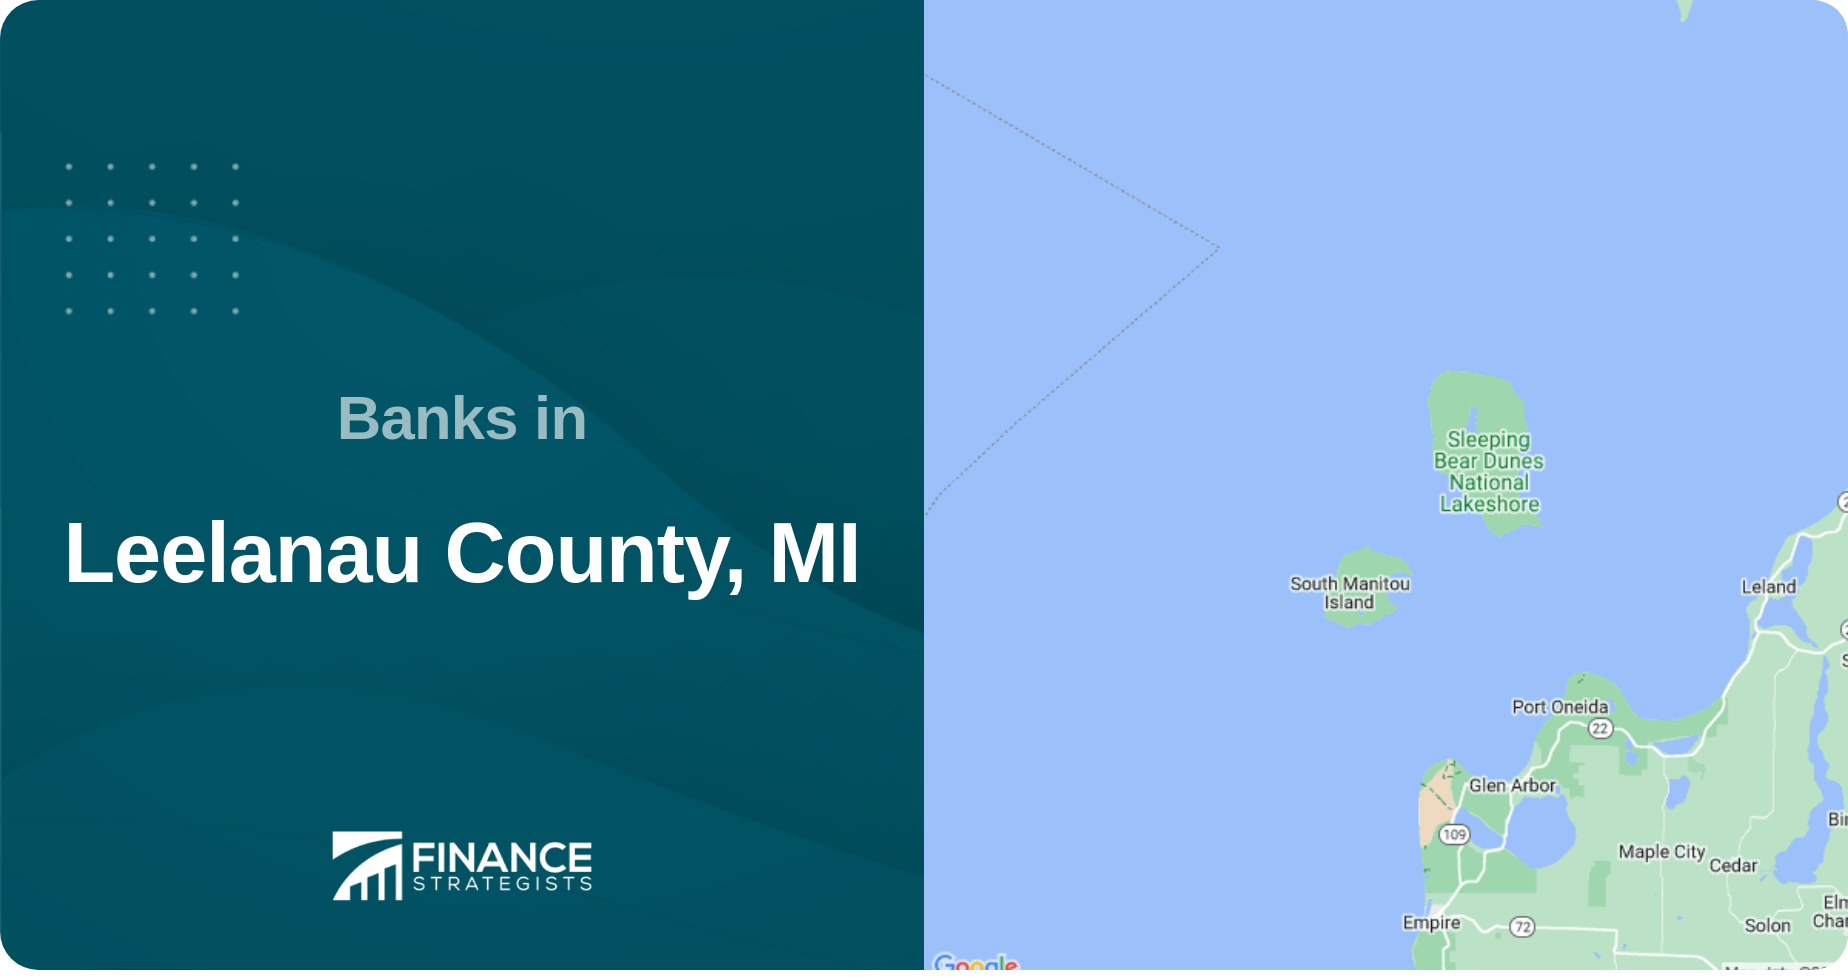 Banks in Leelanau County, MI